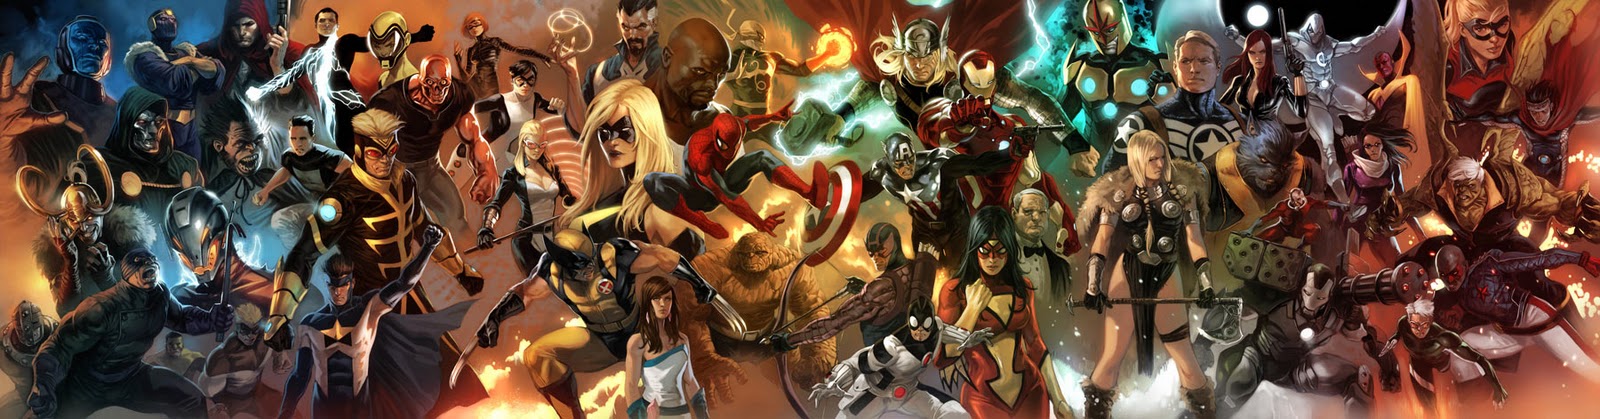 Avengers+characters.jpg